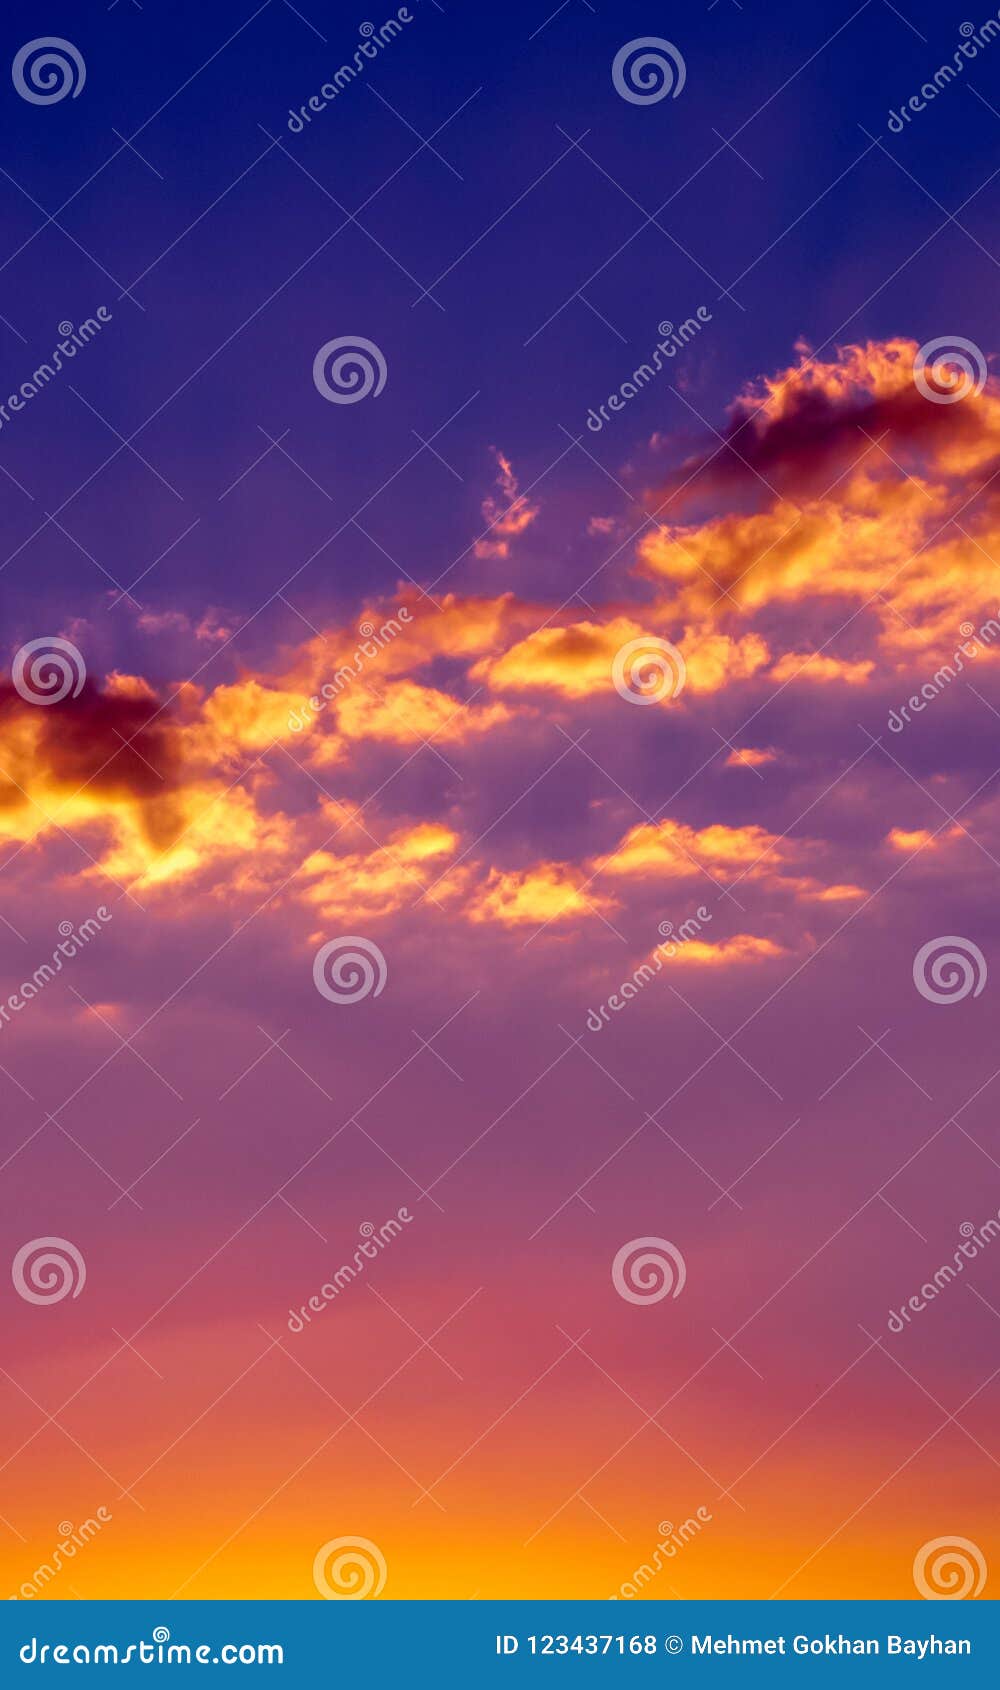 orange hued clouds on colorful sunset sky